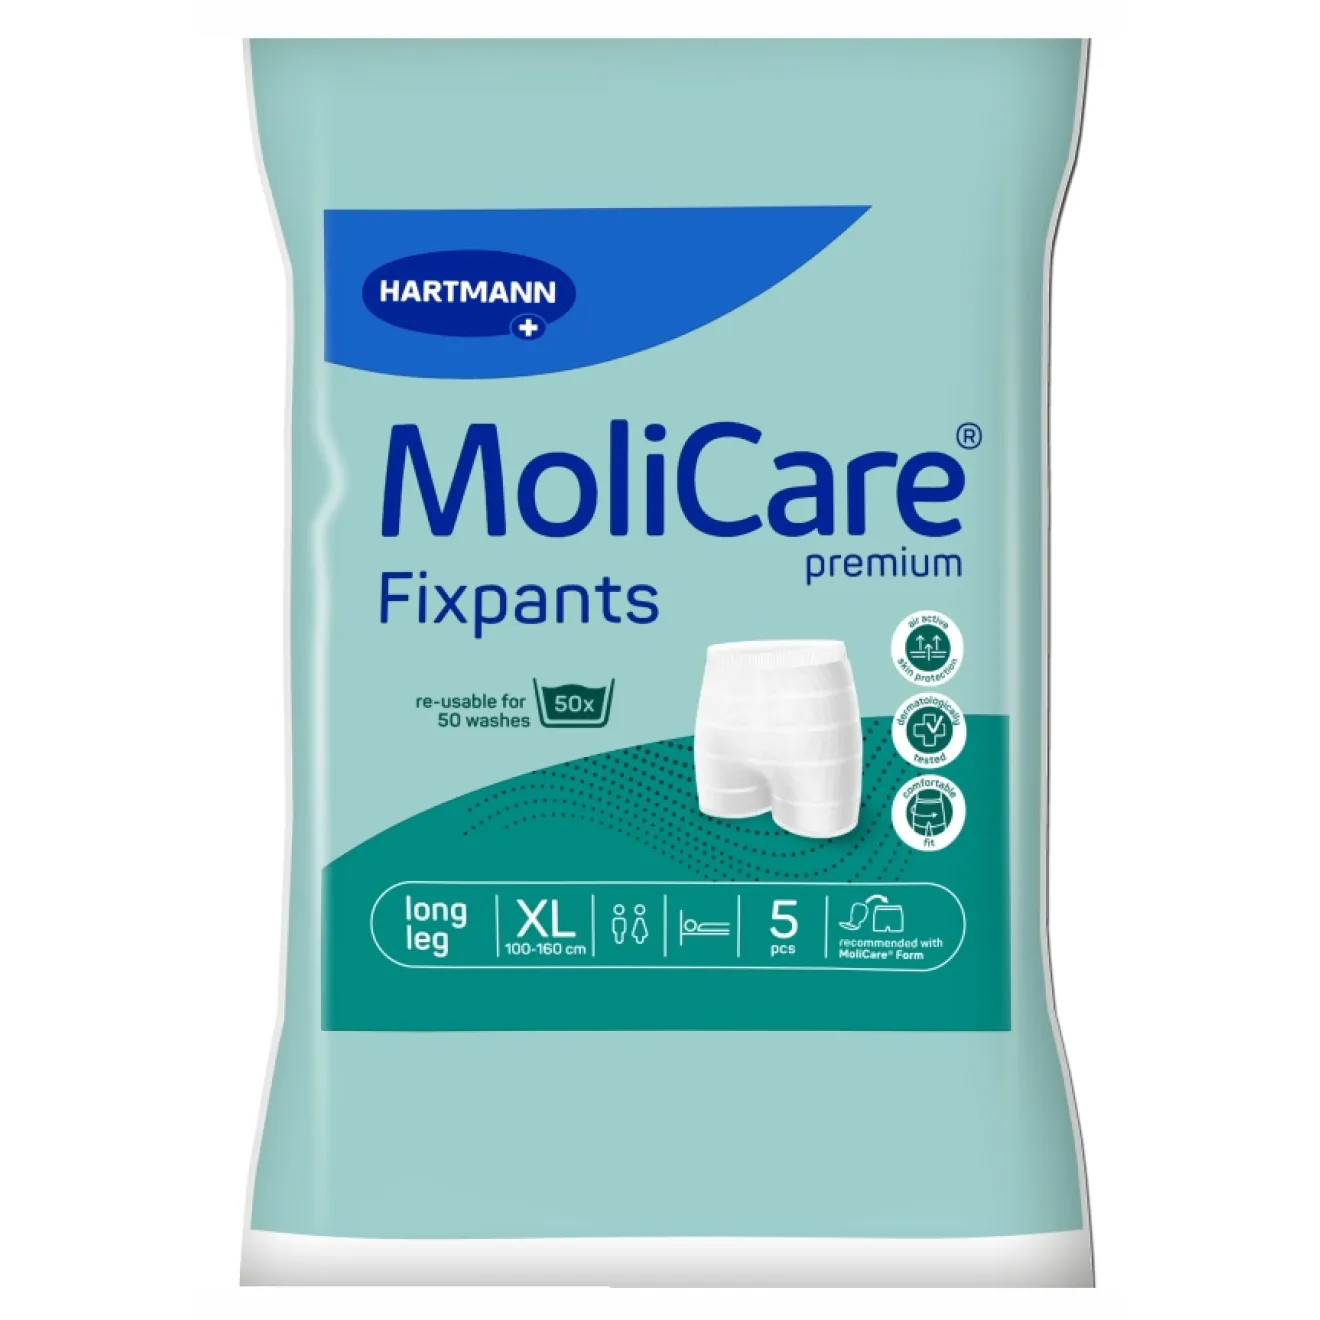 MOLICARE Premium Fixpants long leg Gr.XL 5 ST 947798